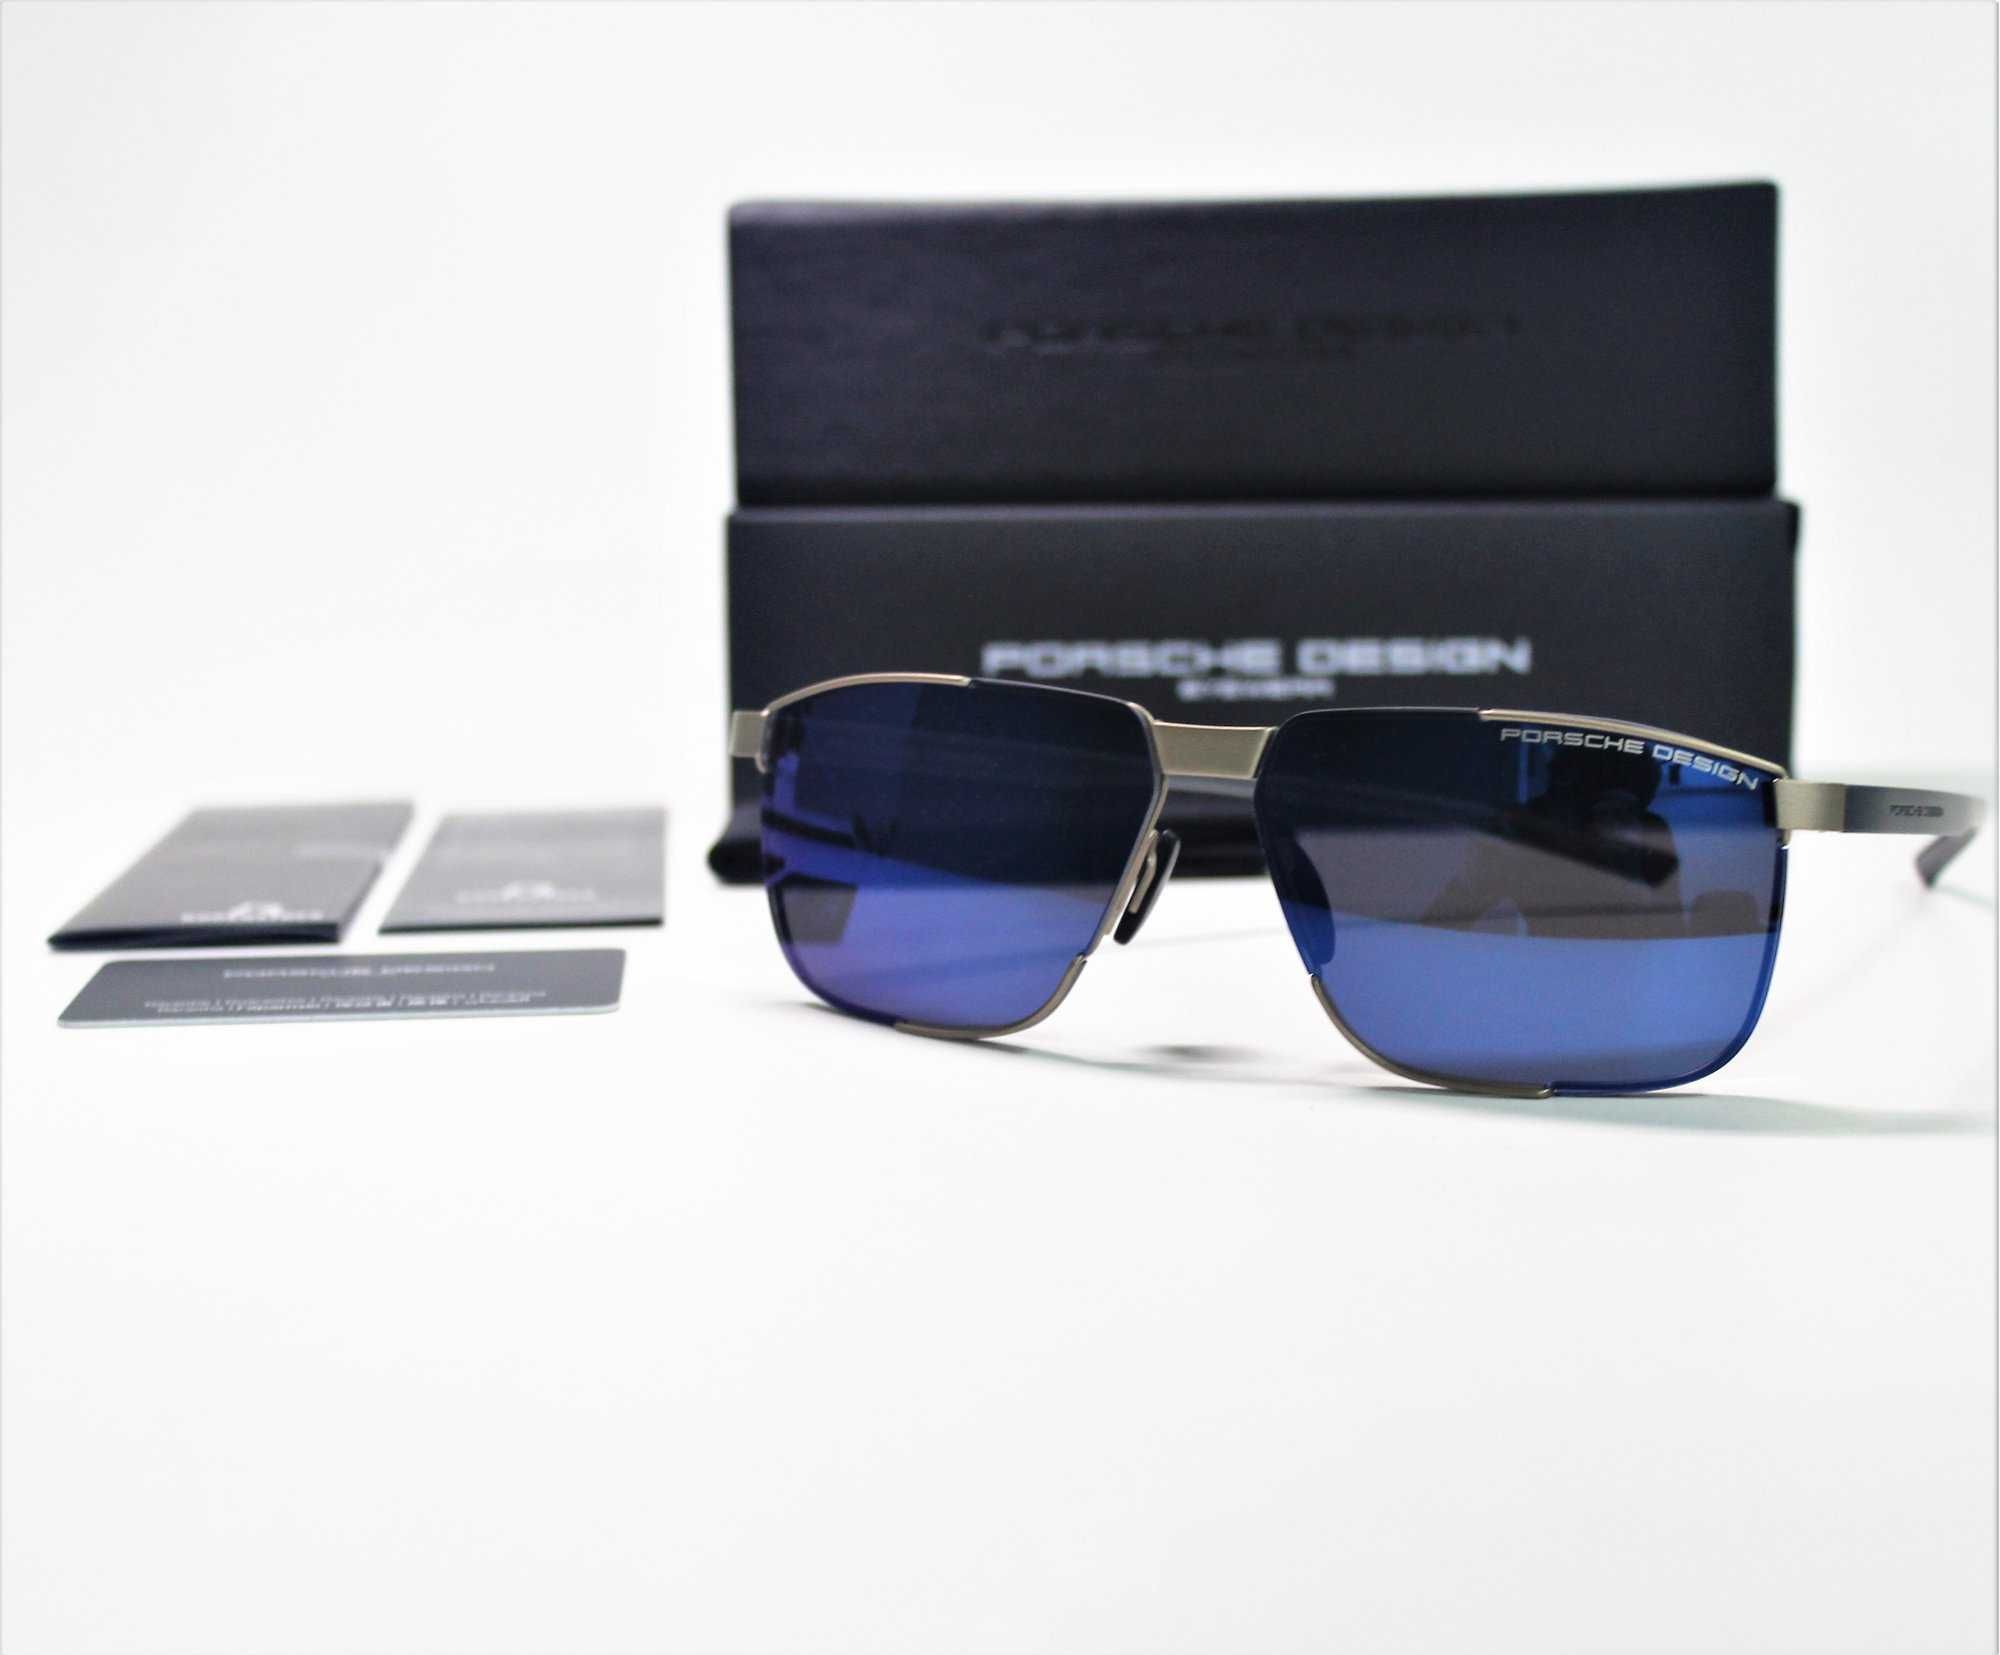 Оригинални мъжки слънчеви очила Porsche Design -55%